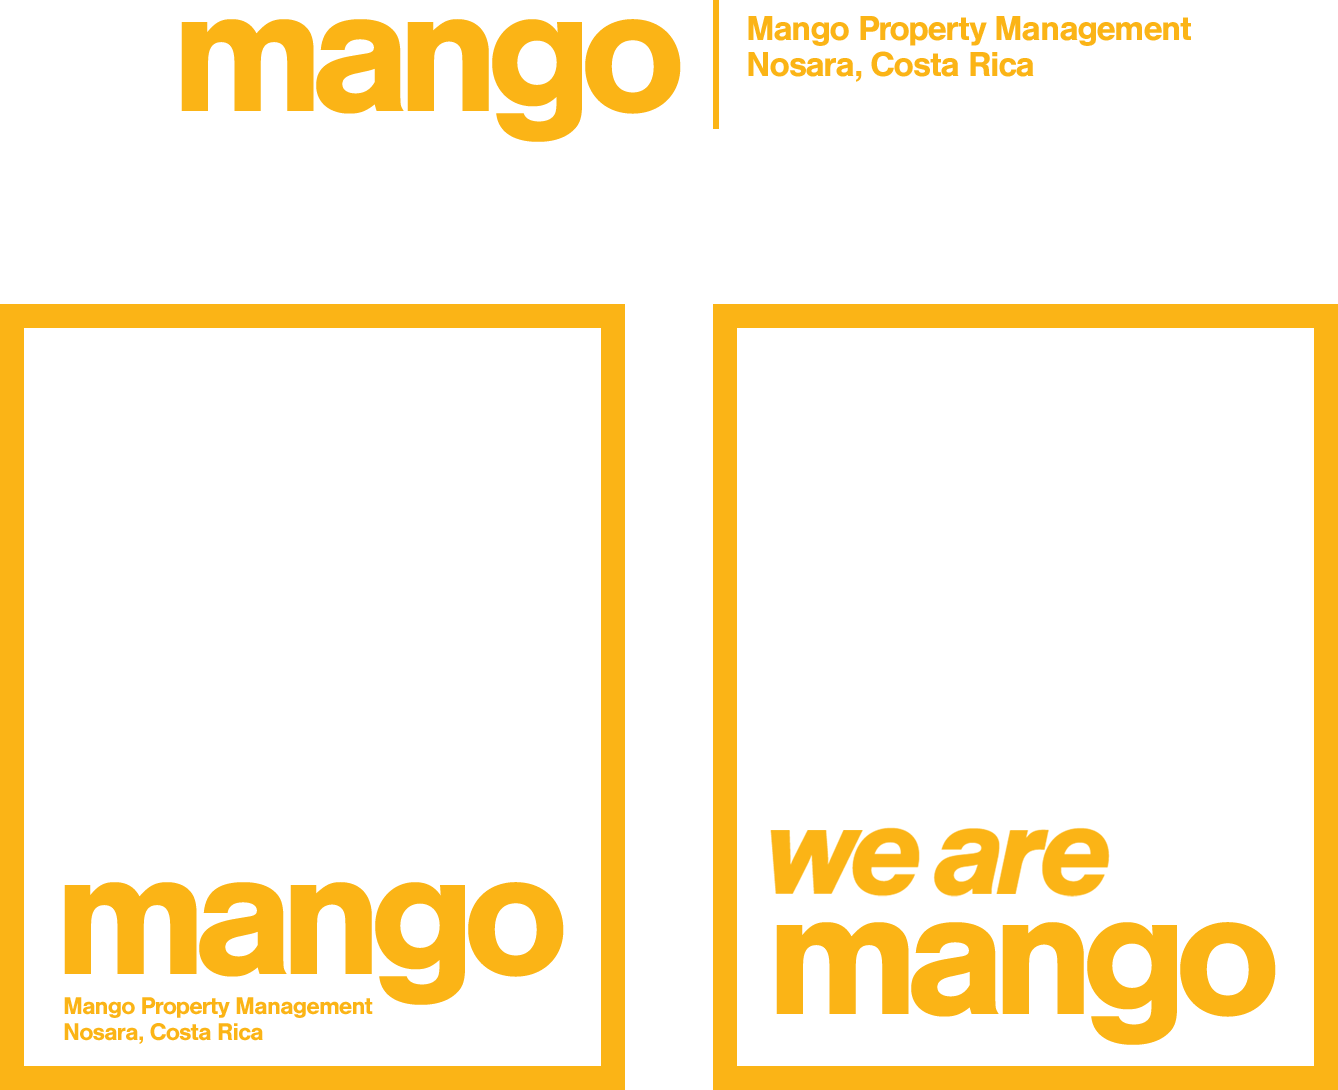 Mango Property Management wordmark variations